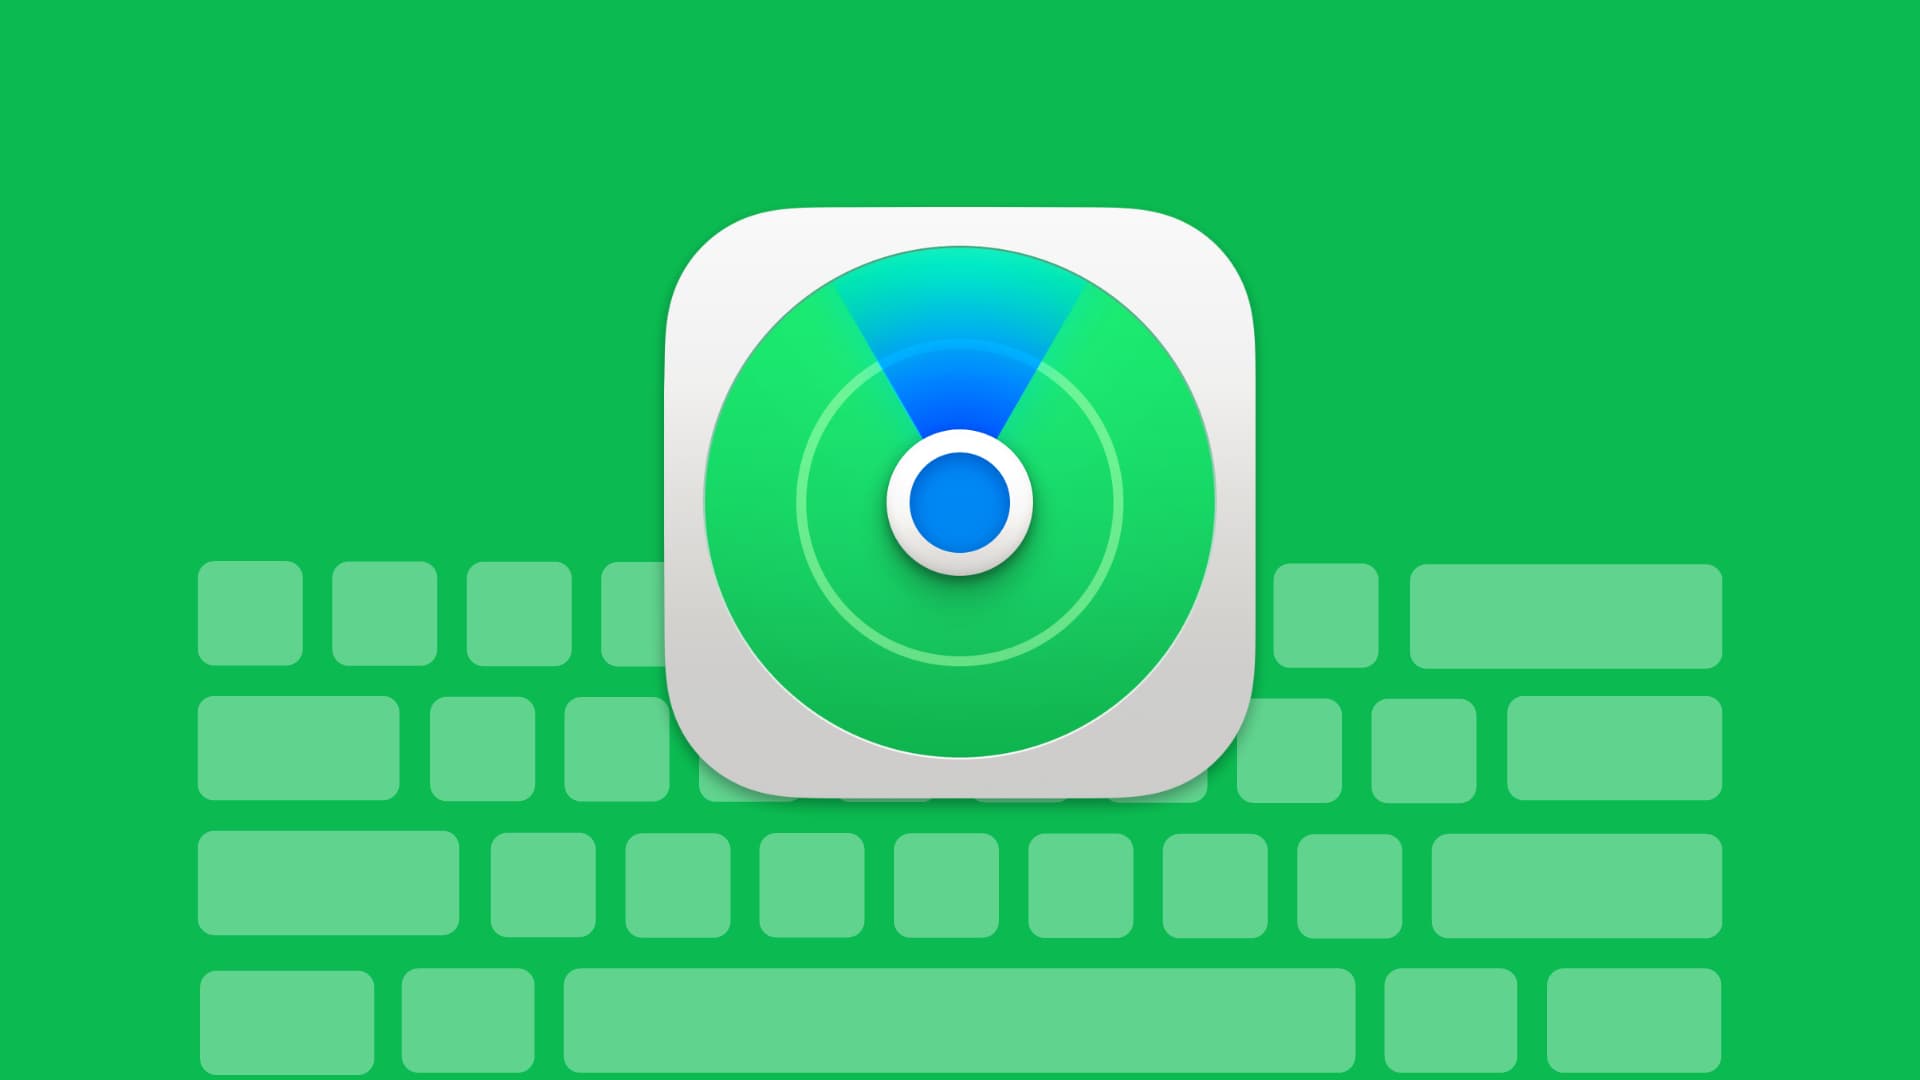 Keyboard shortcuts for Find My app on Mac